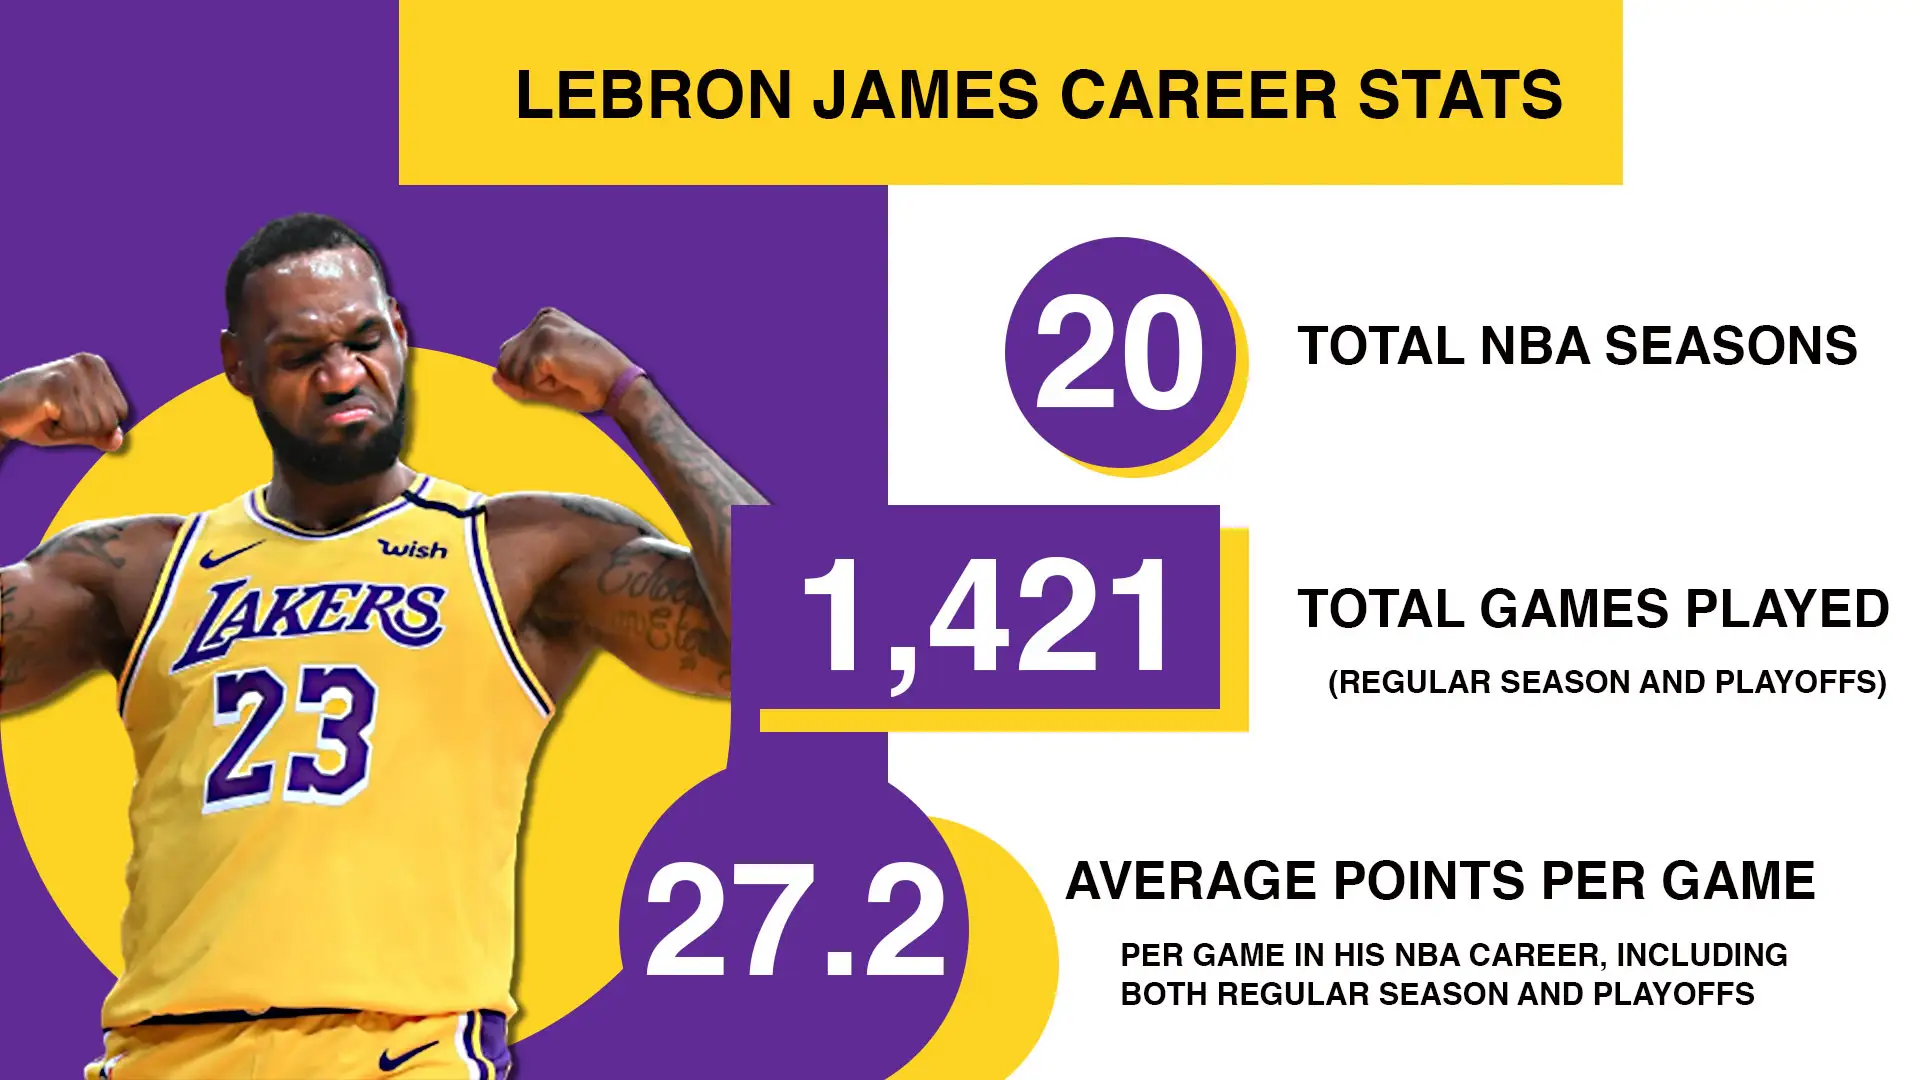 LeBron James Career Stats